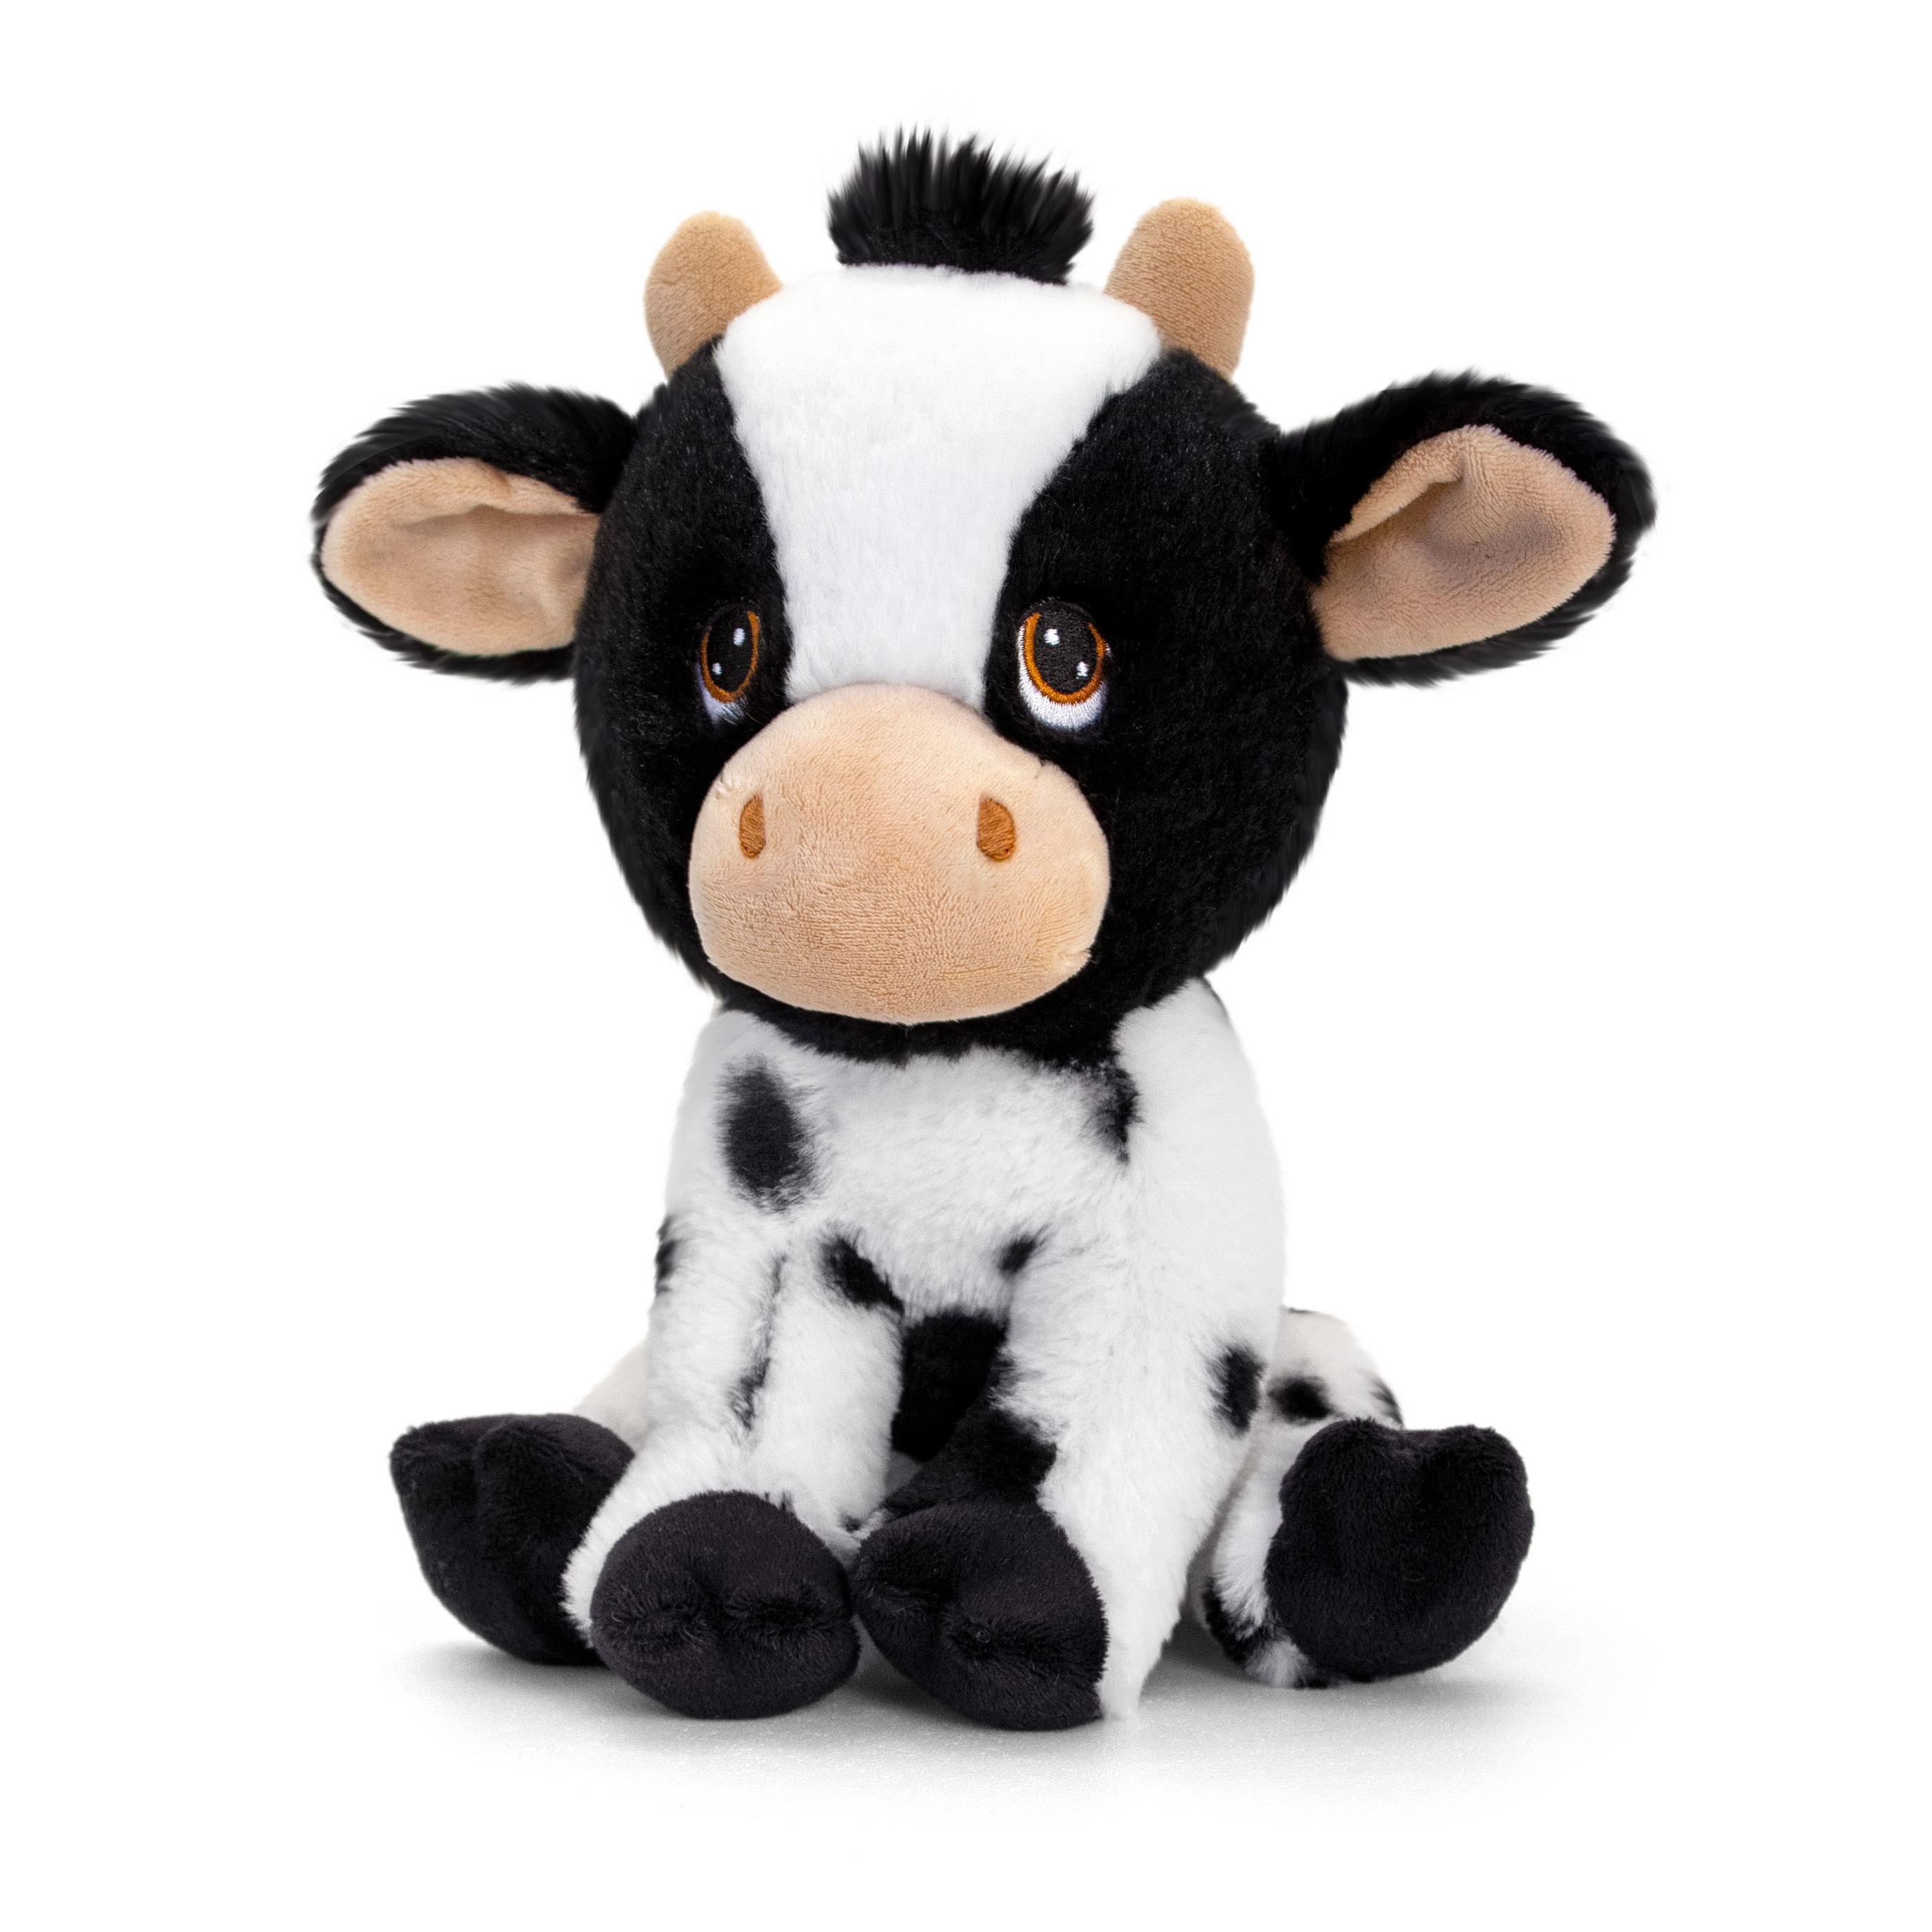 Keel Toys knuffeldieren bonte koe van de boerderij 25 cm -